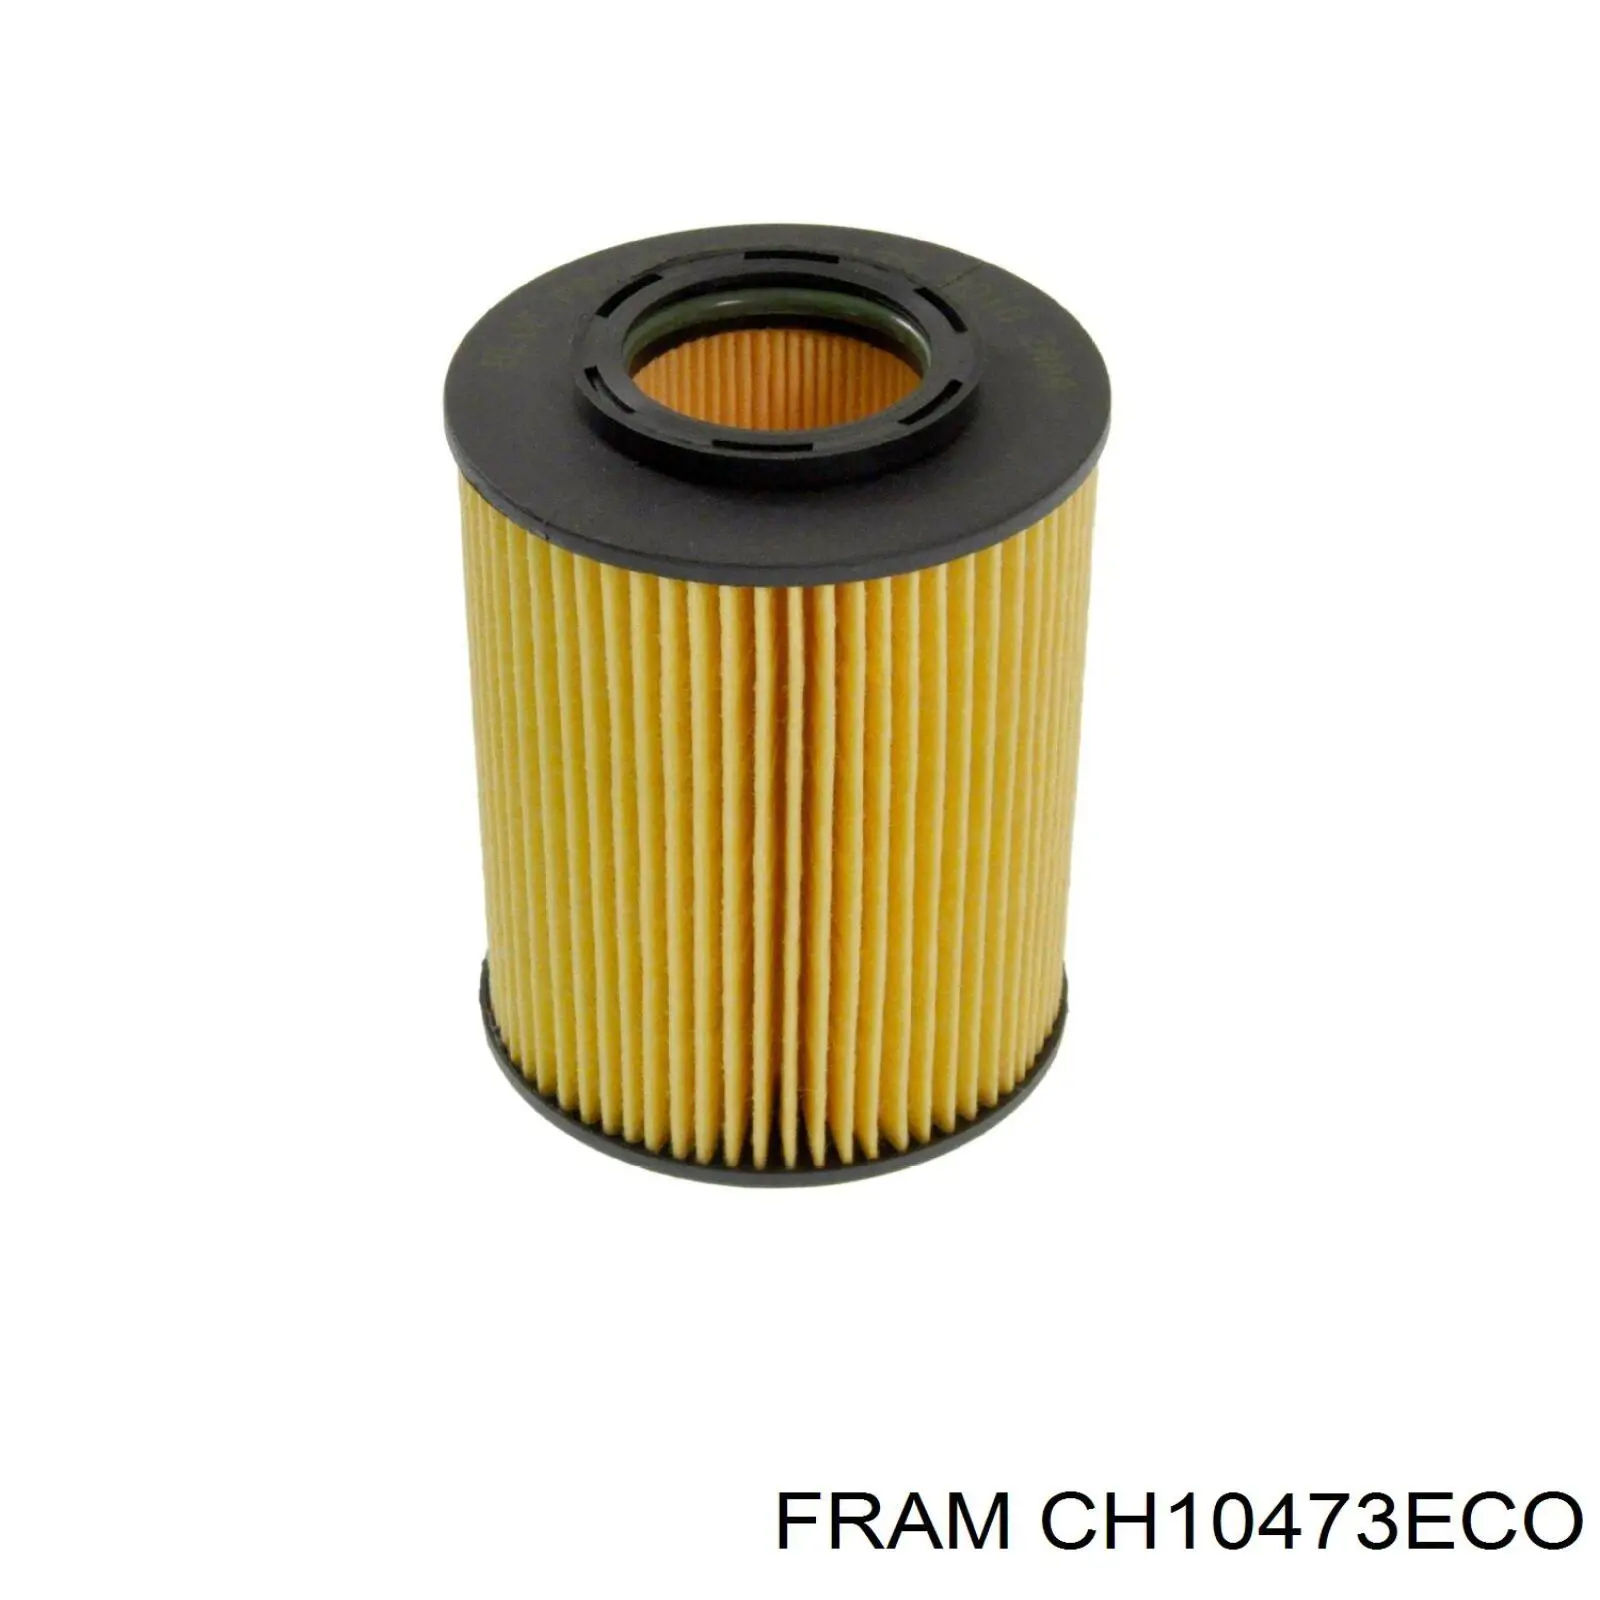 CH10473ECO Fram filtro de aceite